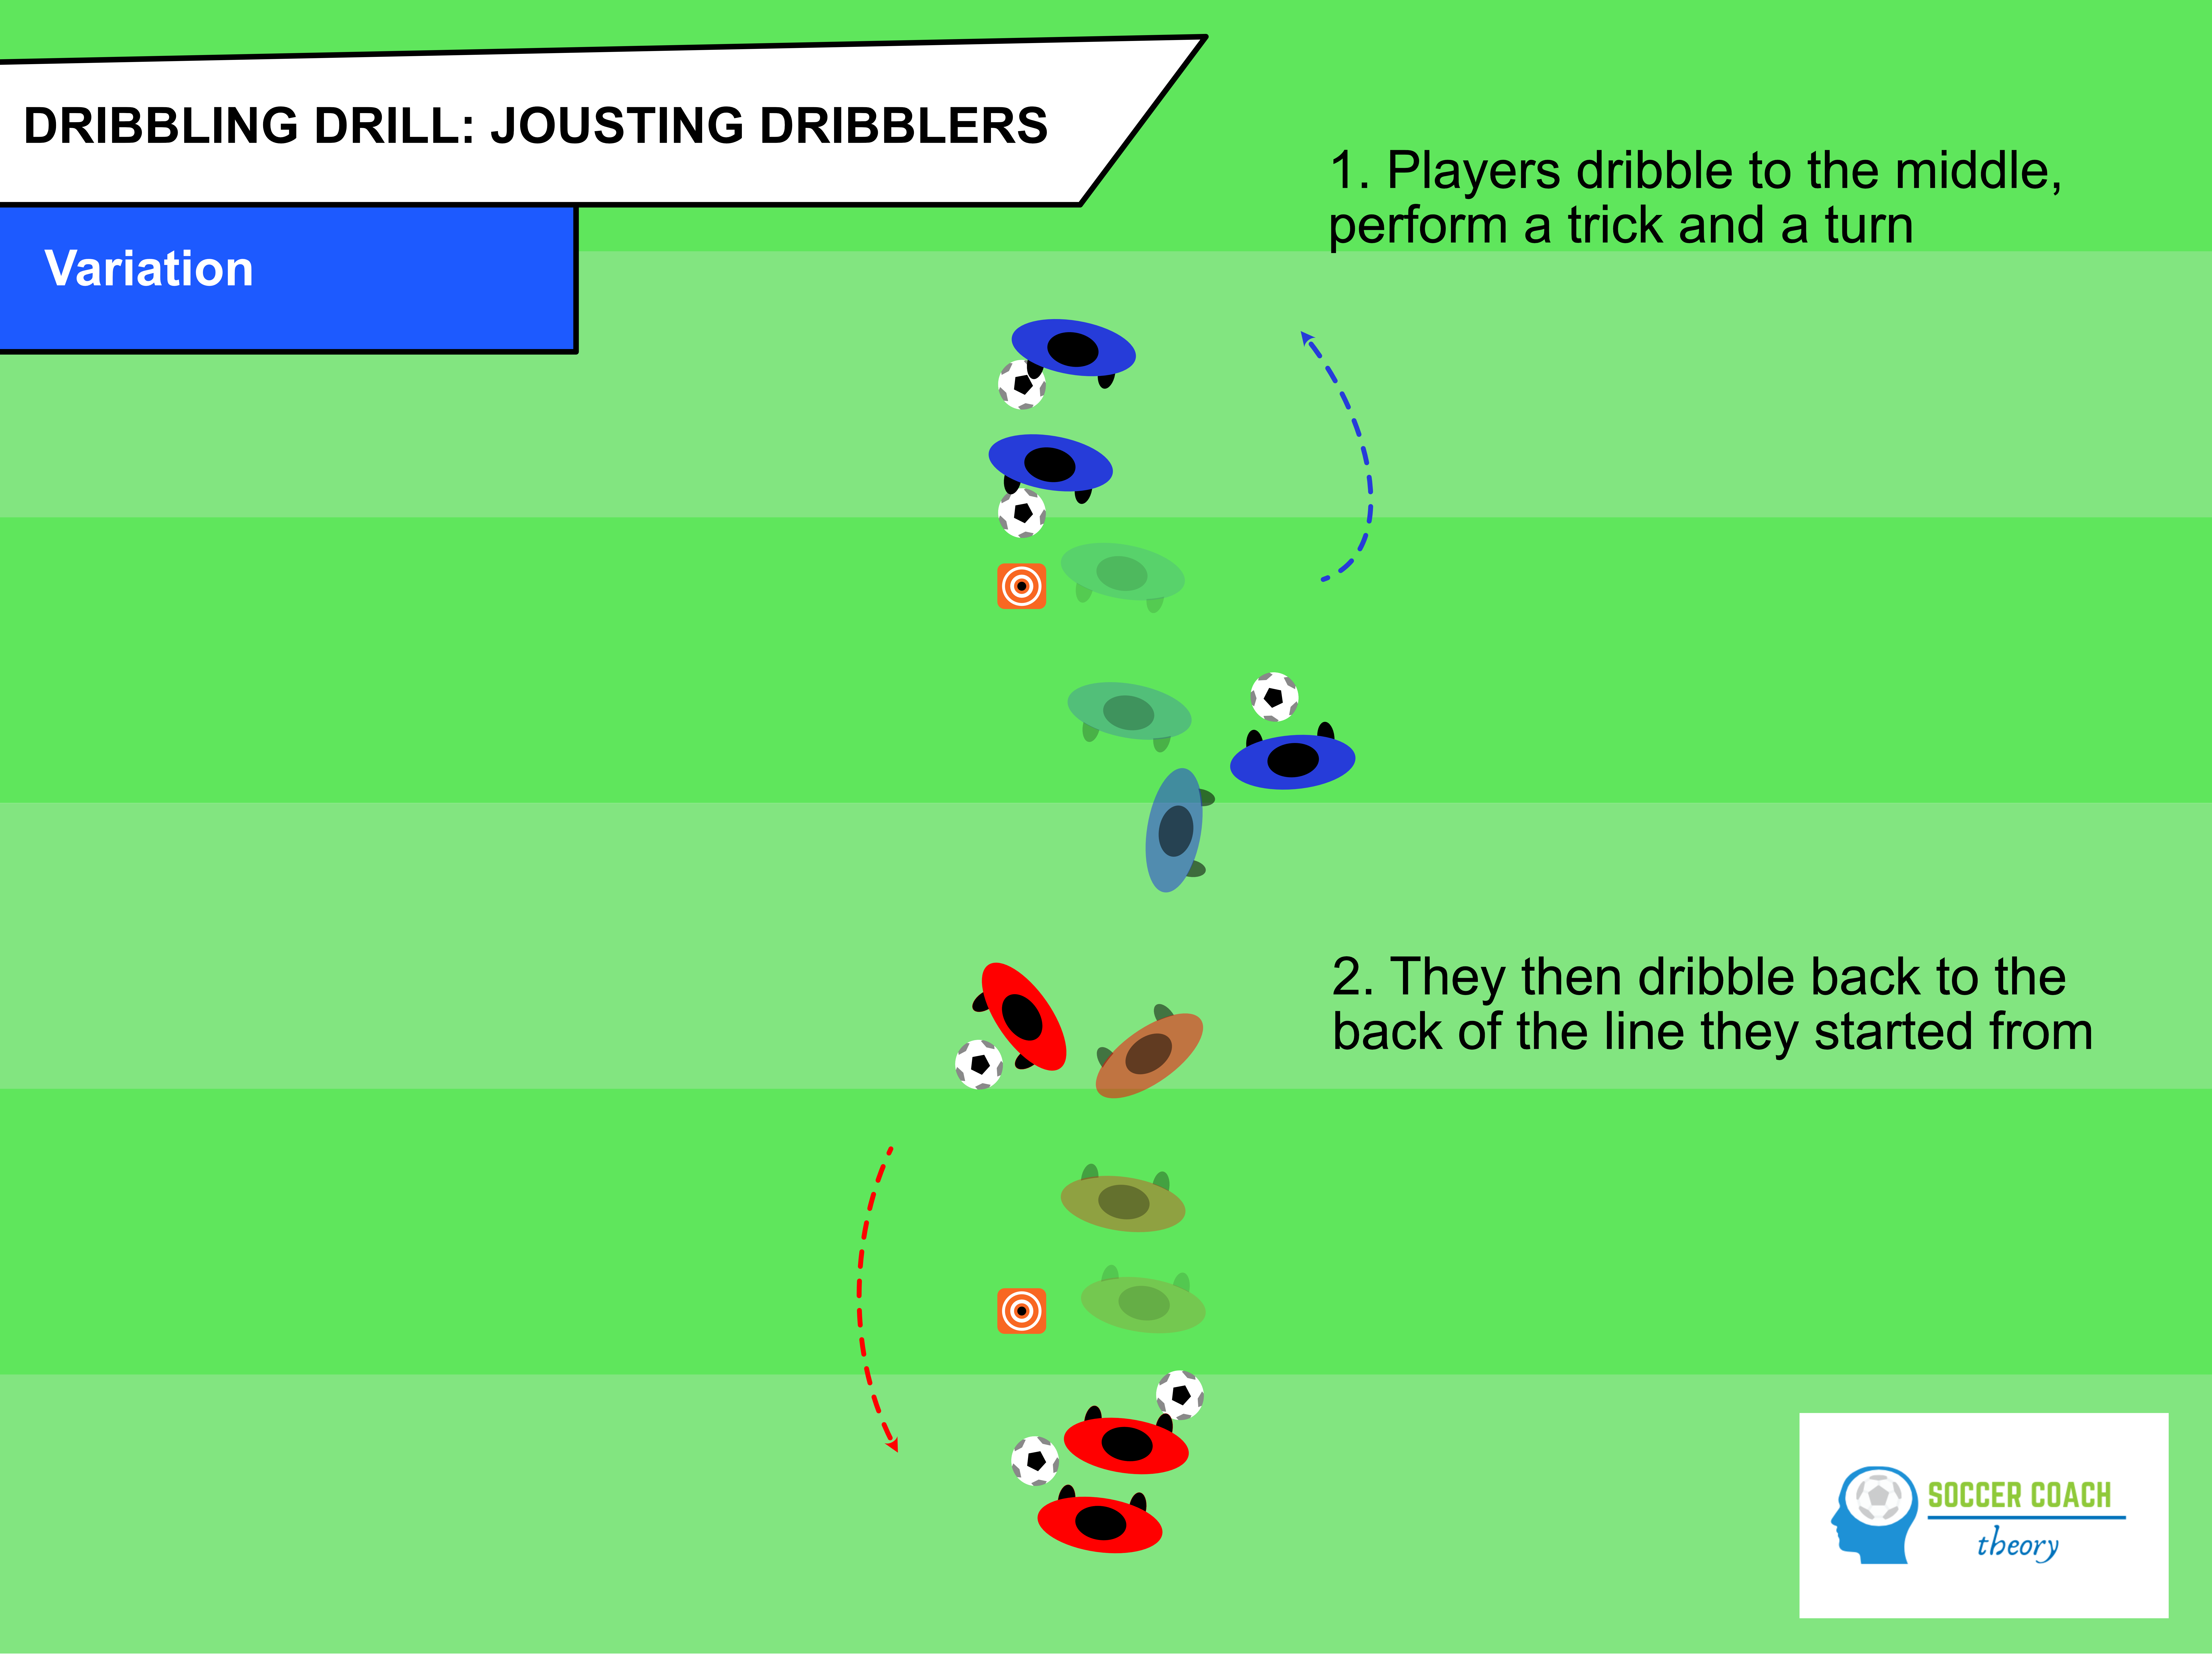 Soccer jousting dribblers - variation